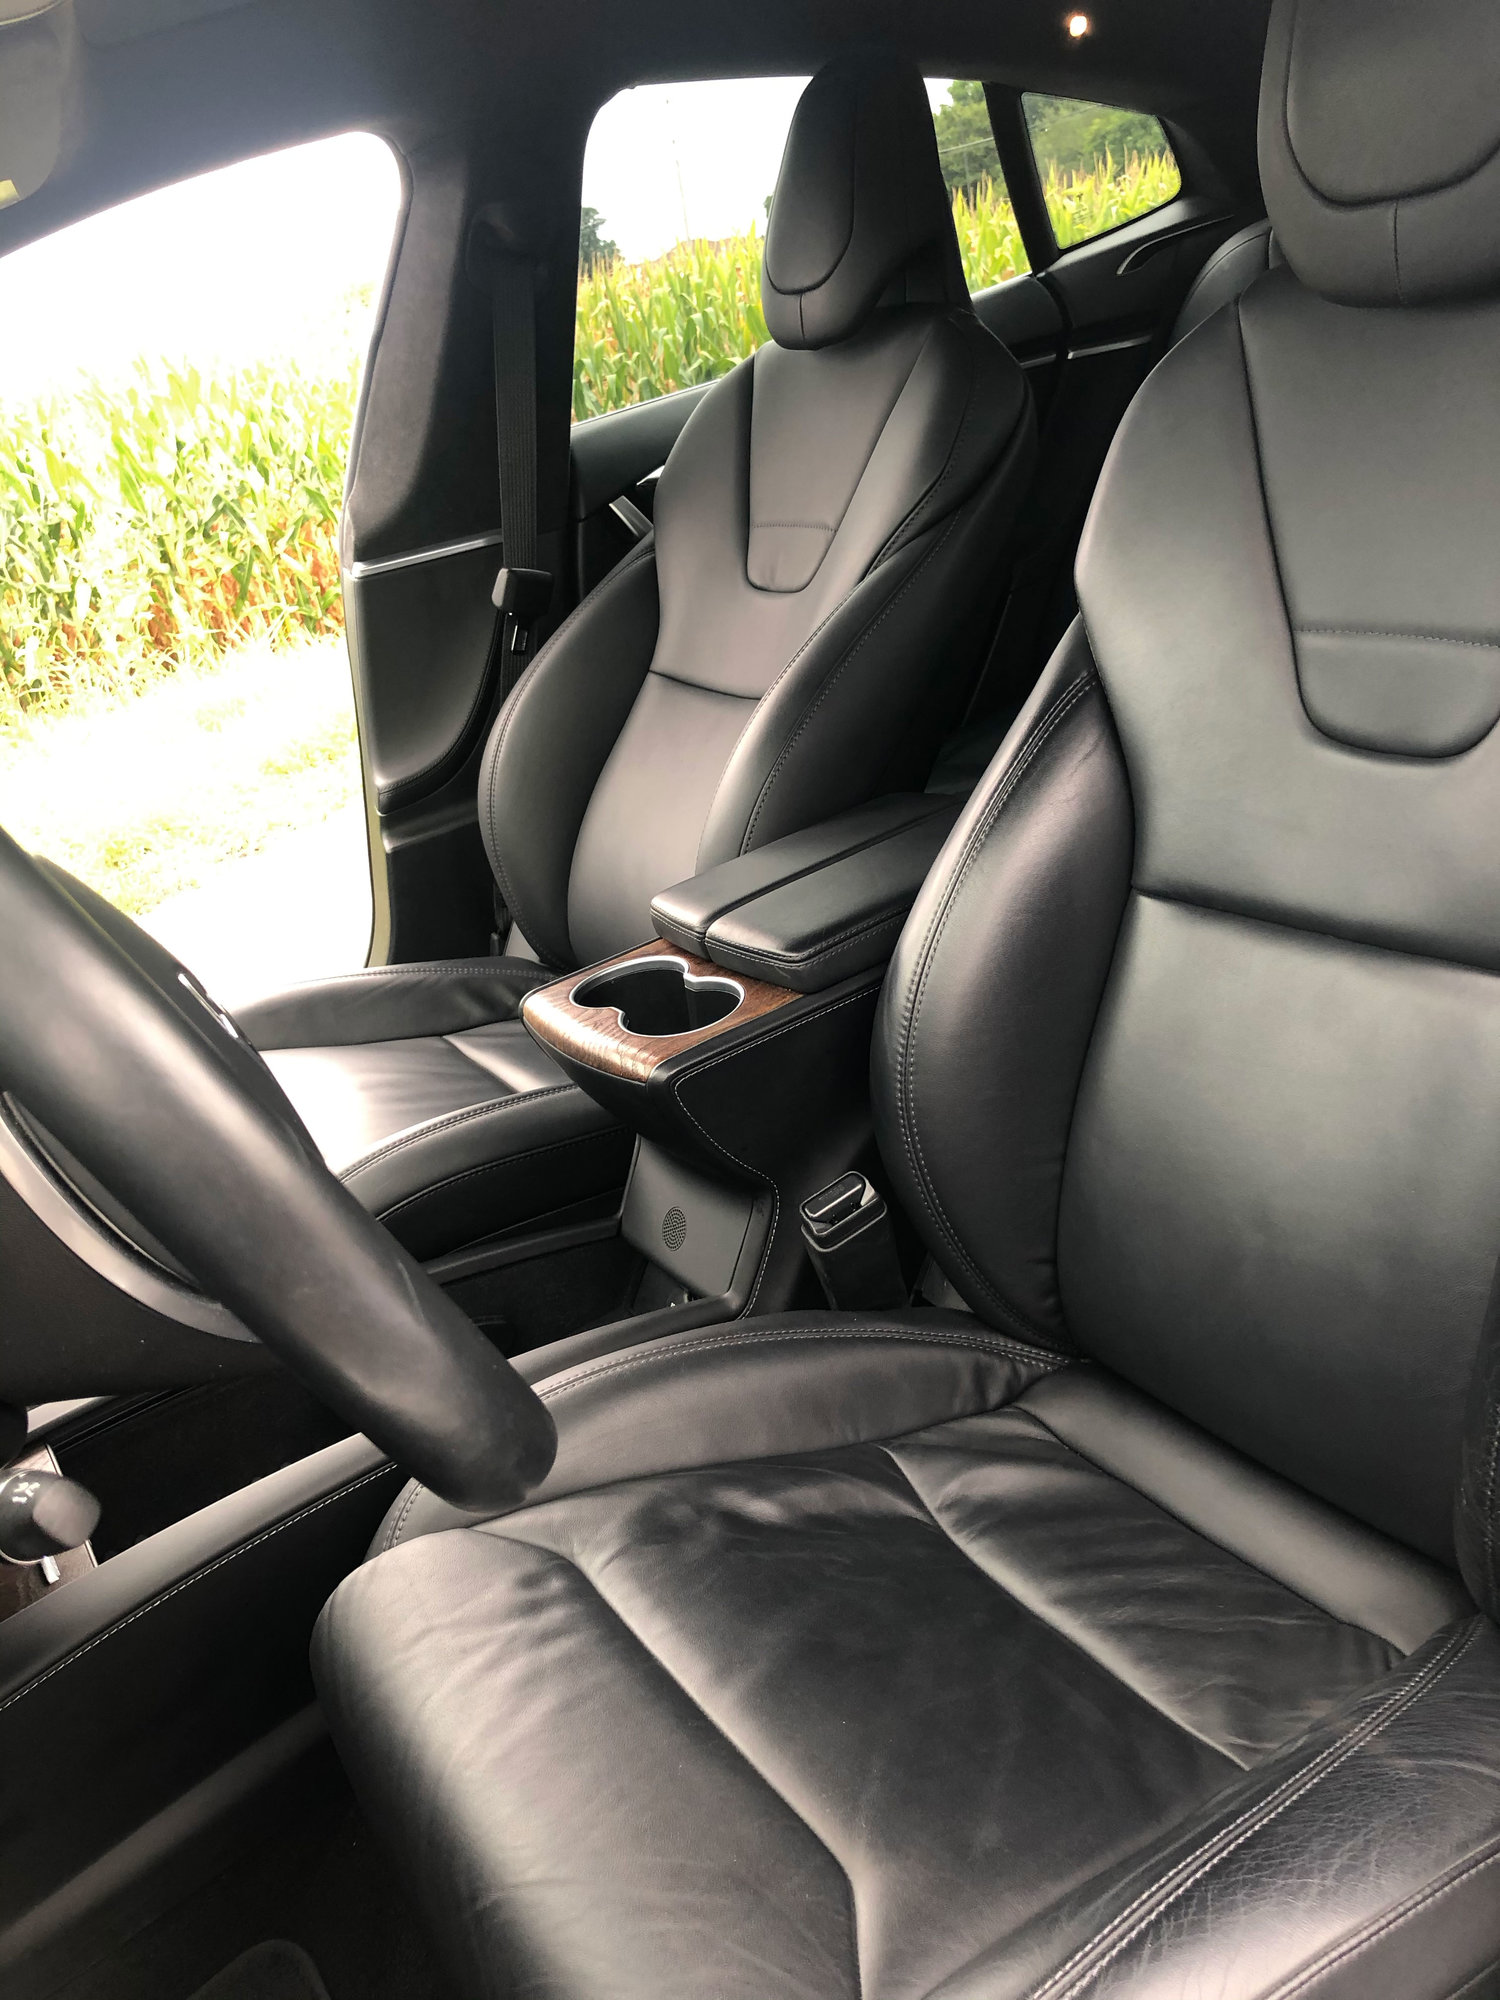 interior-front-seats.jpg